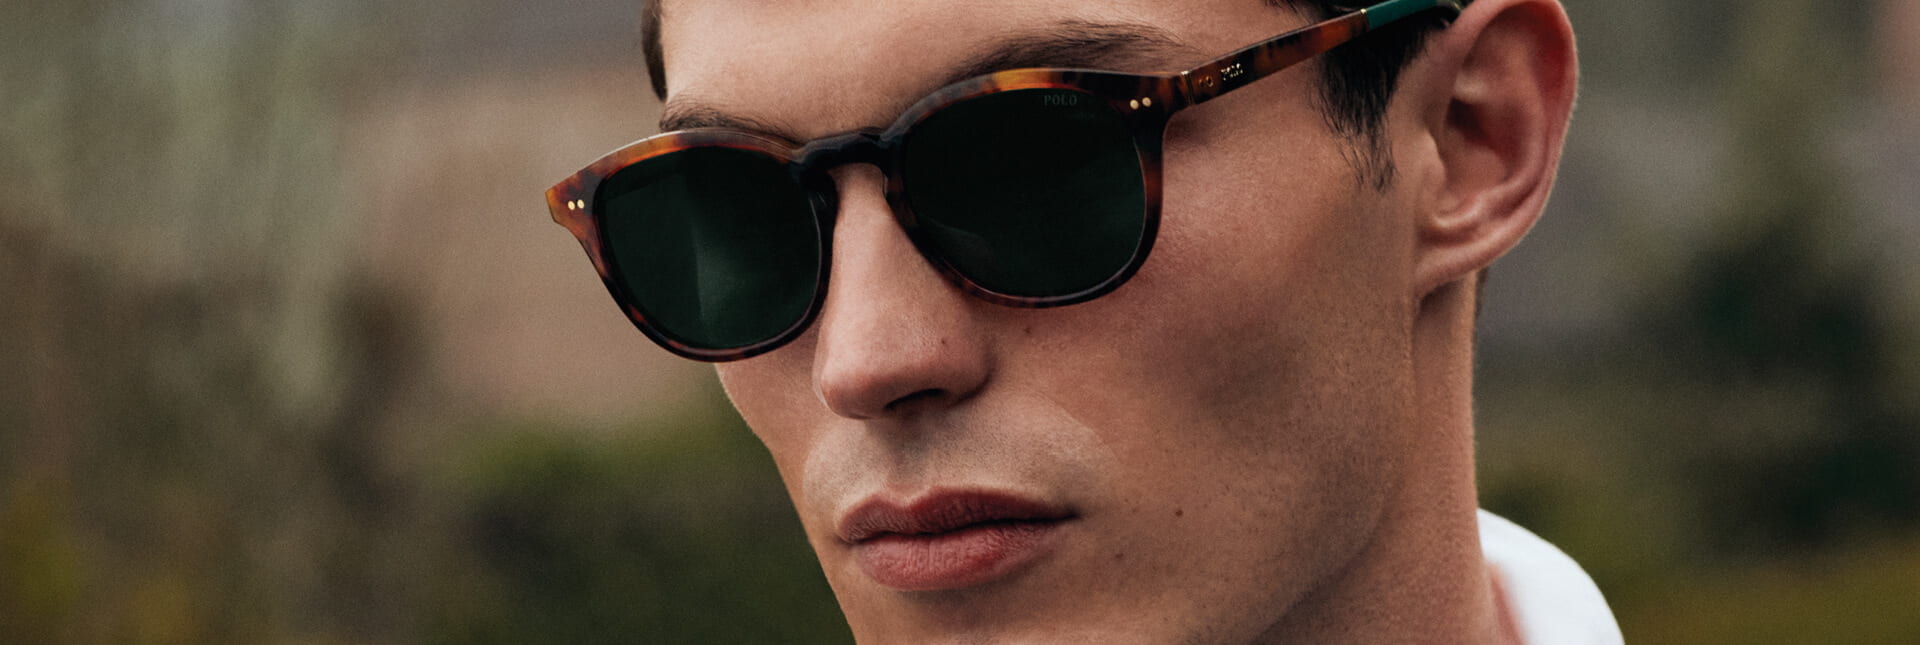 Gafas de sol Polo Ralph Lauren